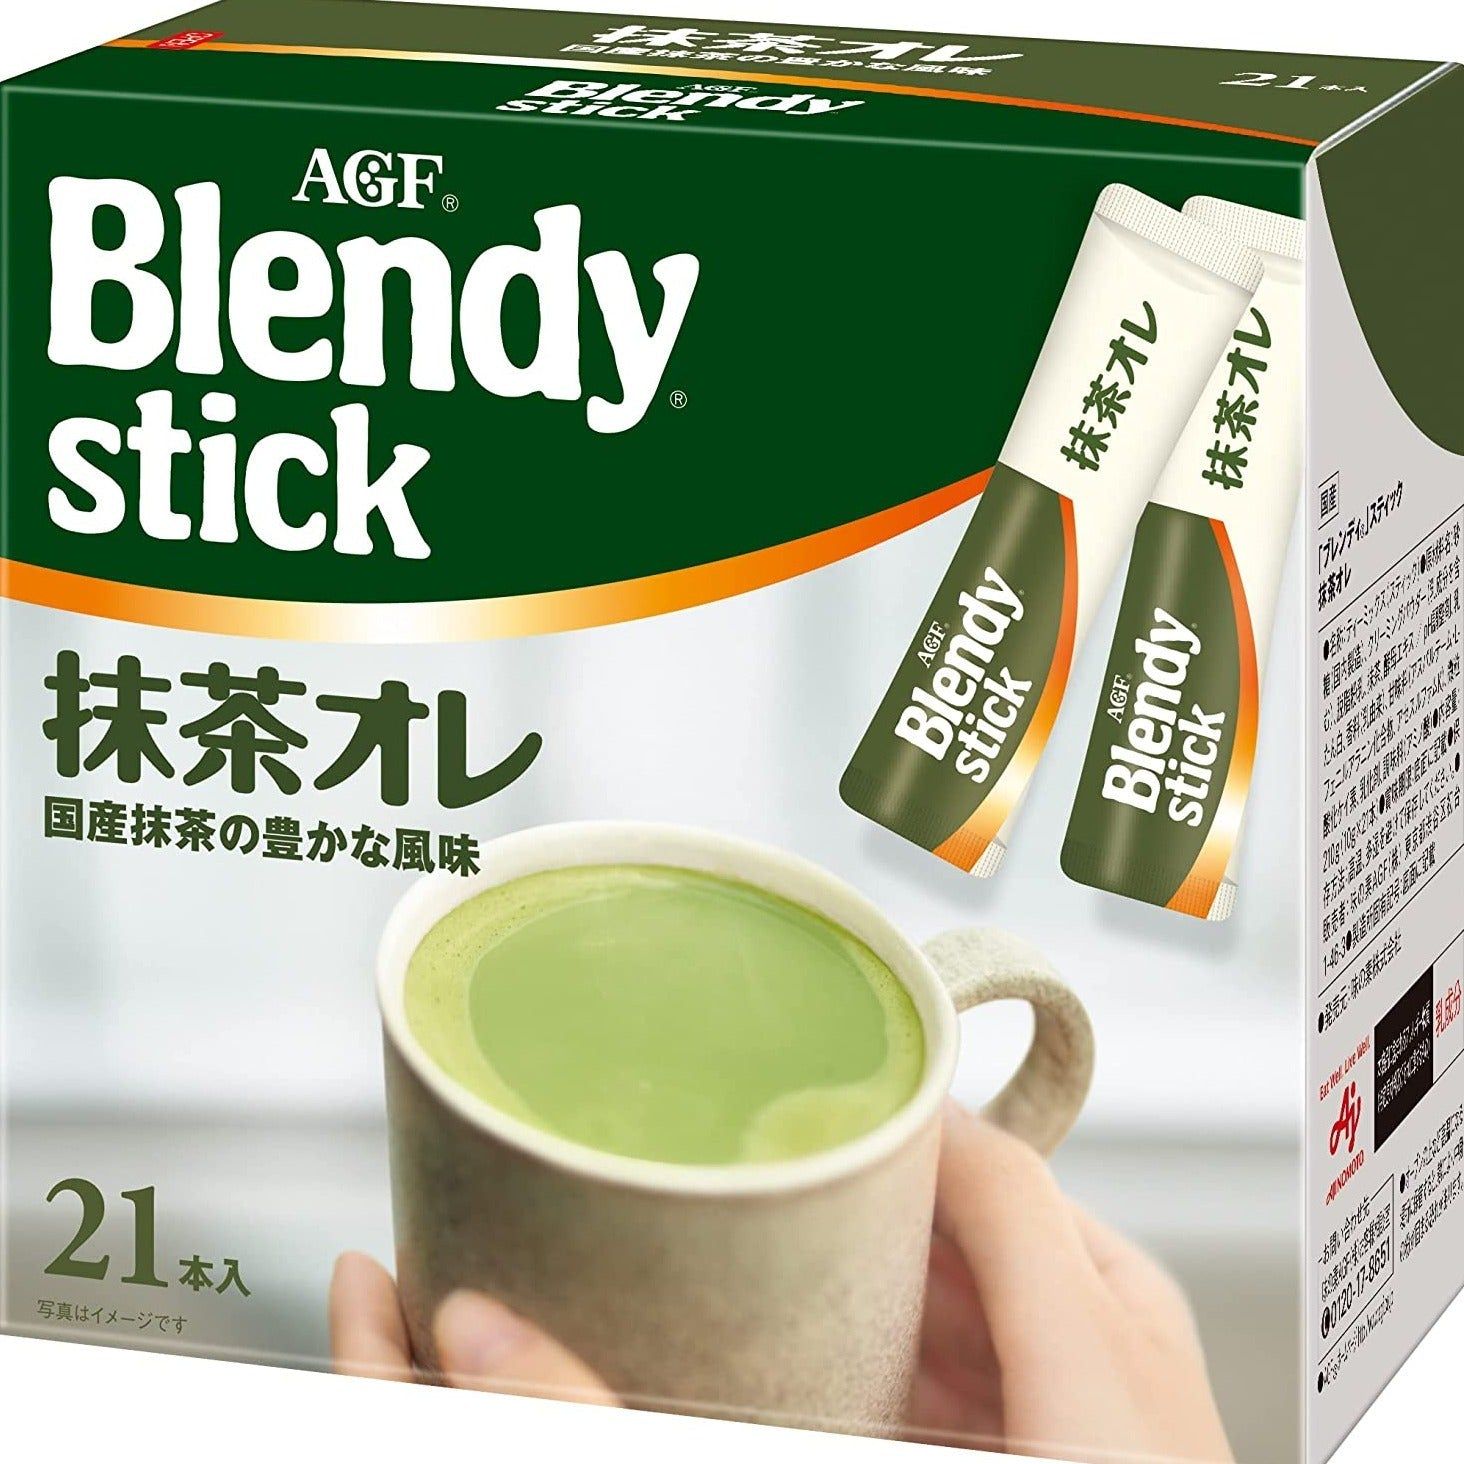 AGF Blendy Cafe Latory: 20 Coffee Sticks Assortment